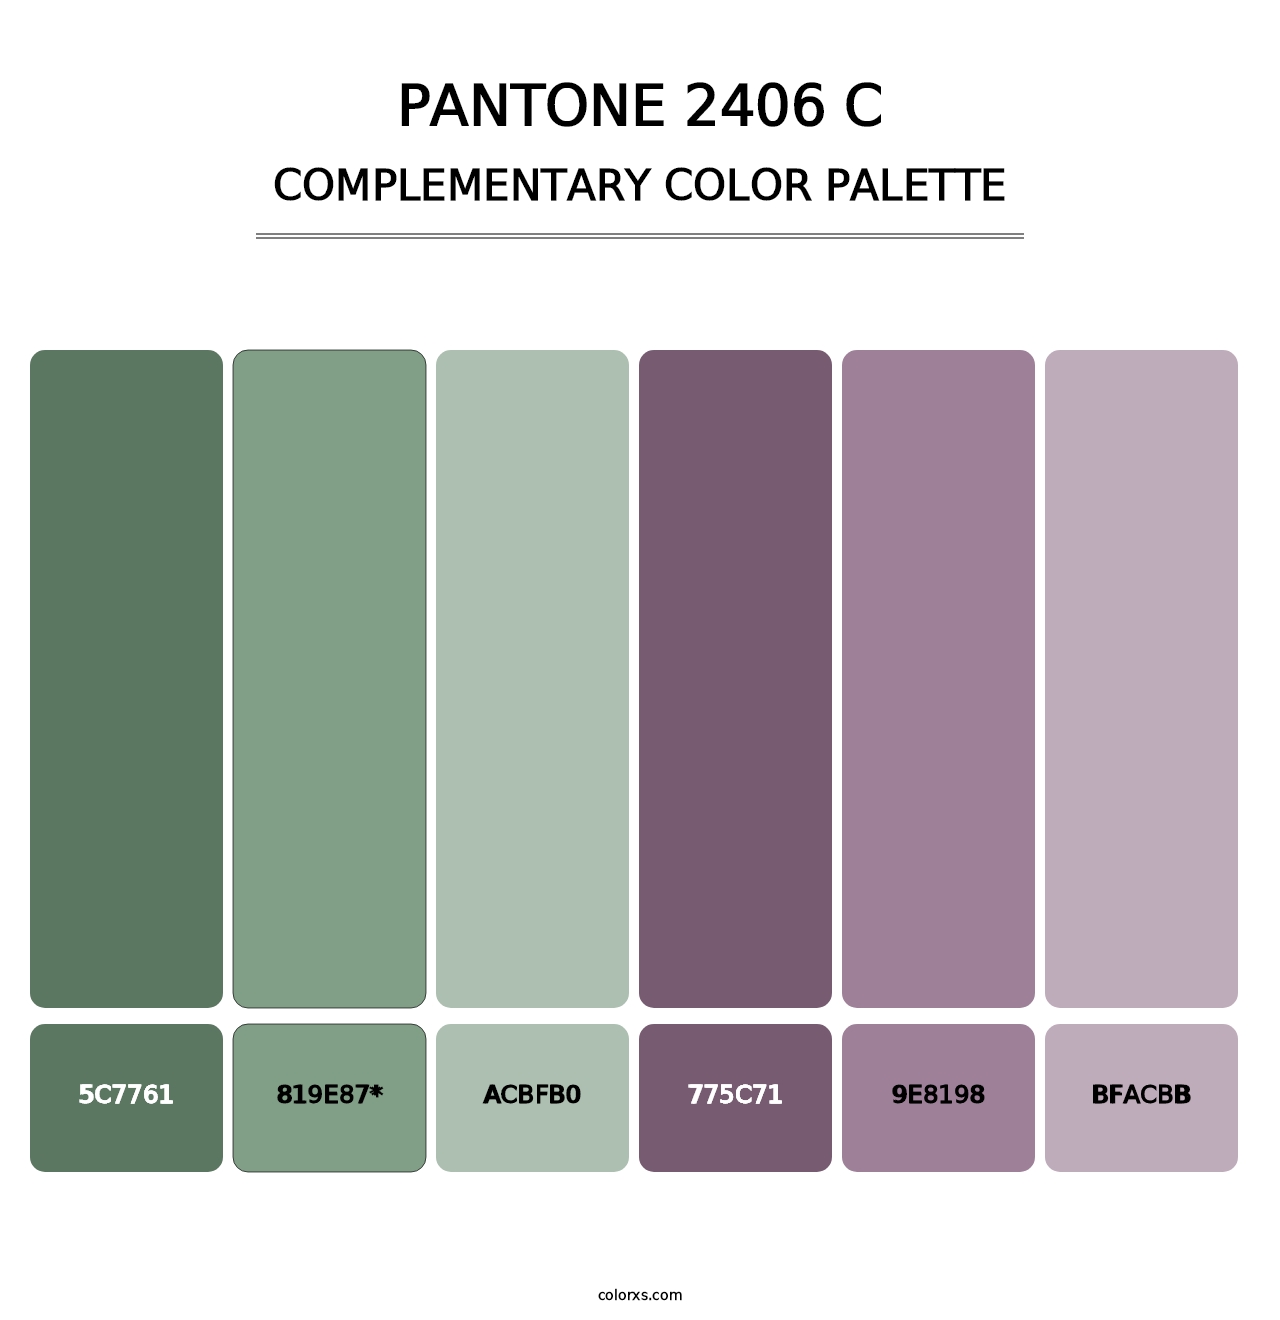 PANTONE 2406 C - Complementary Color Palette